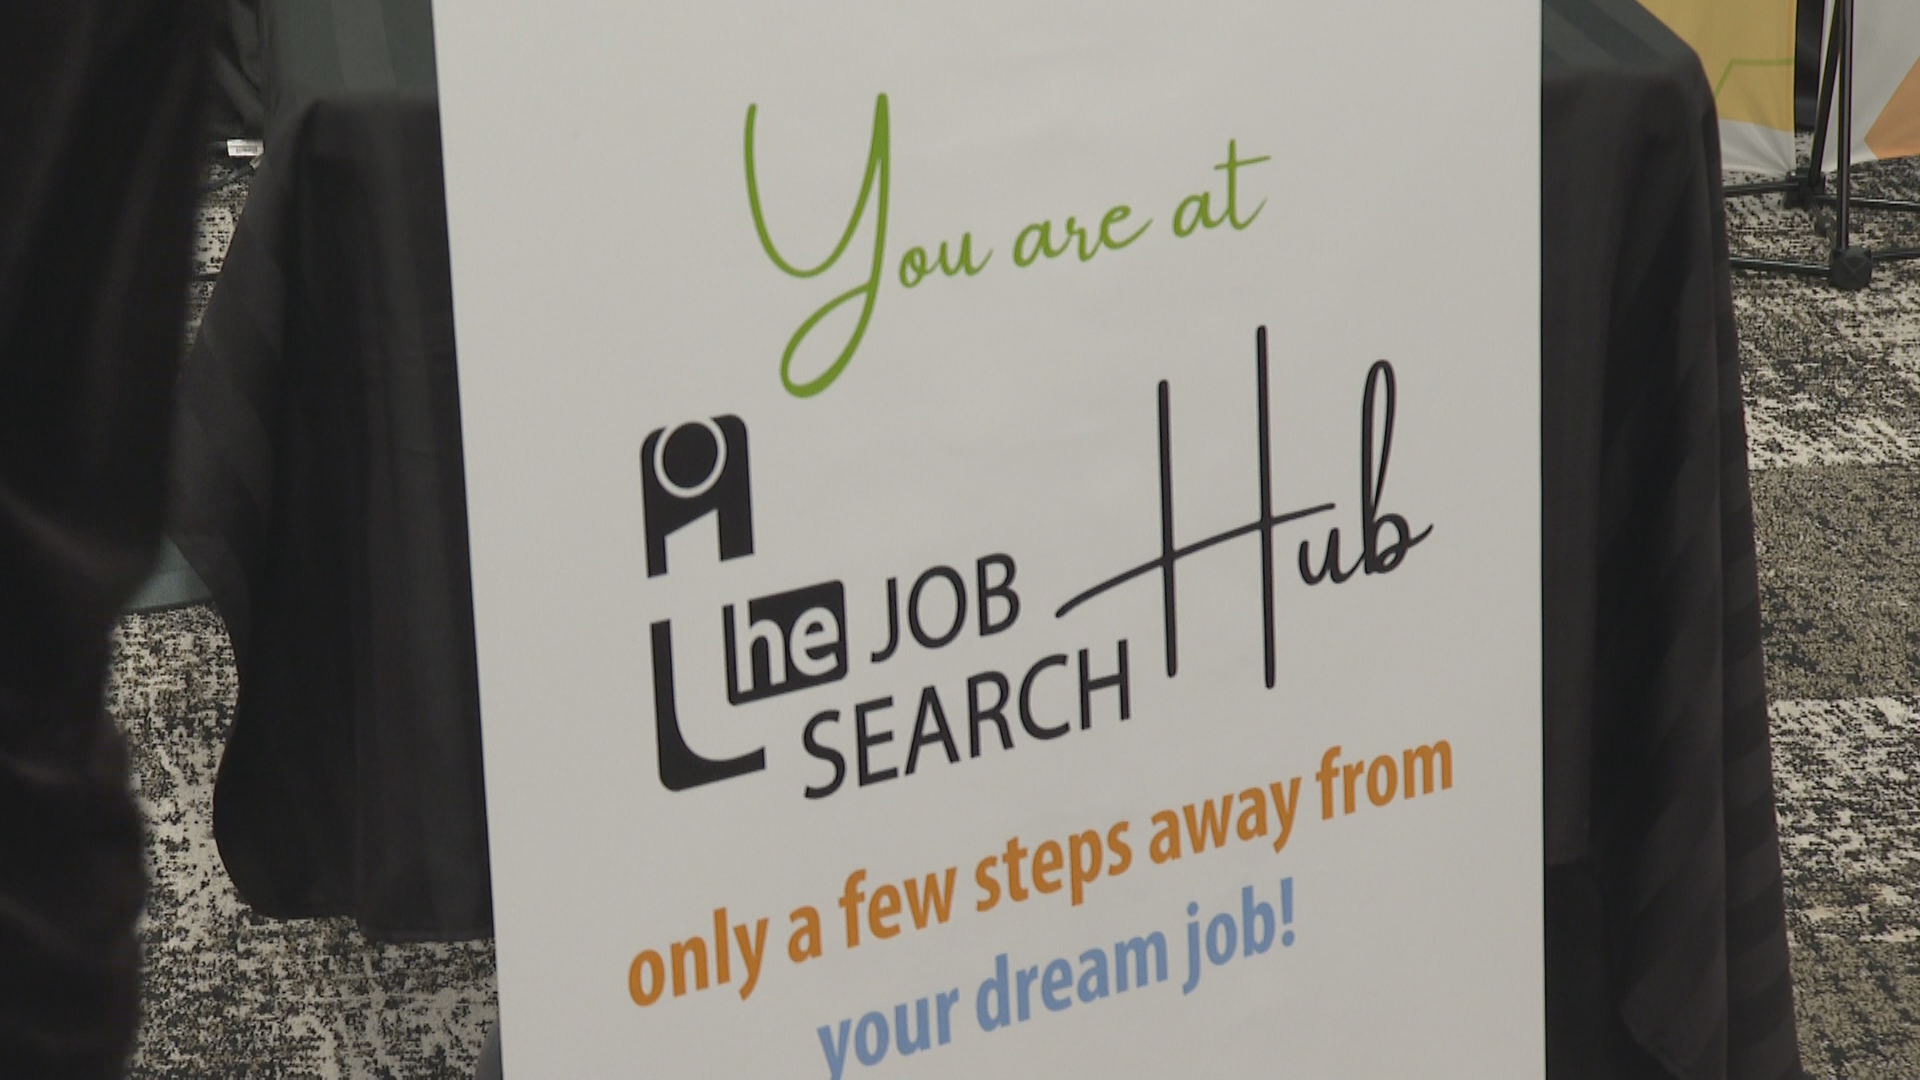 Teamworks Career Centre fair sees hundreds of Lethbridge jobseekers